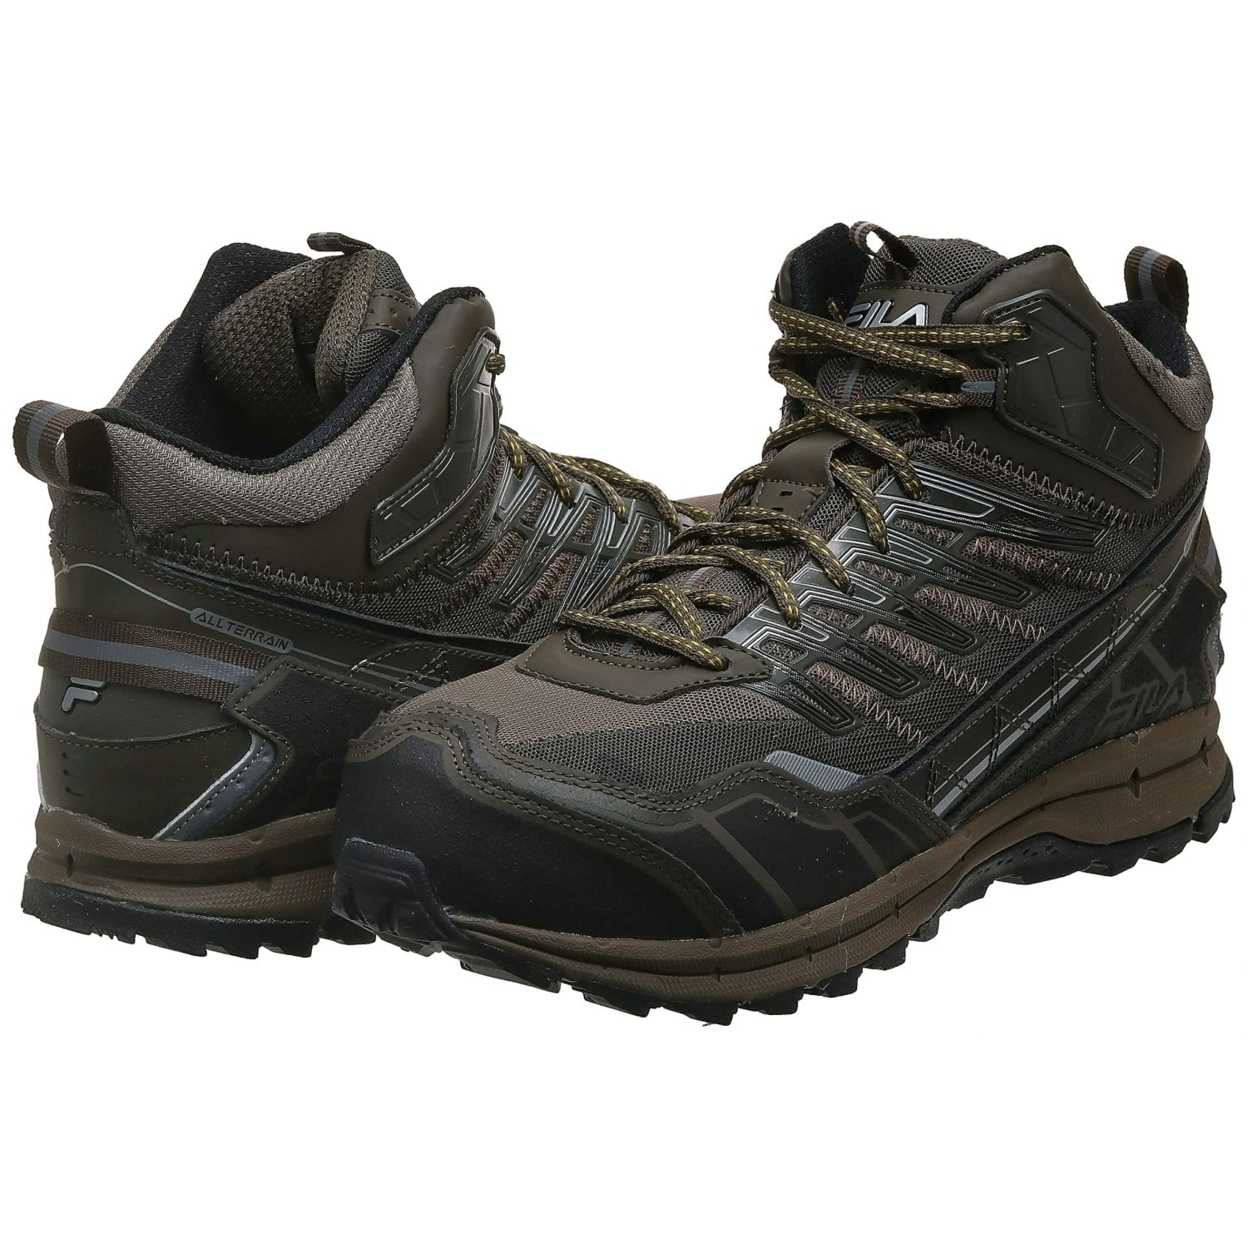 Fila Men's Hail Storm 3 Mid Composite Toe Trail Work Shoes Hiking WNUT/MBRN/GFUS - WNUT/MBRN/GFUS, 10